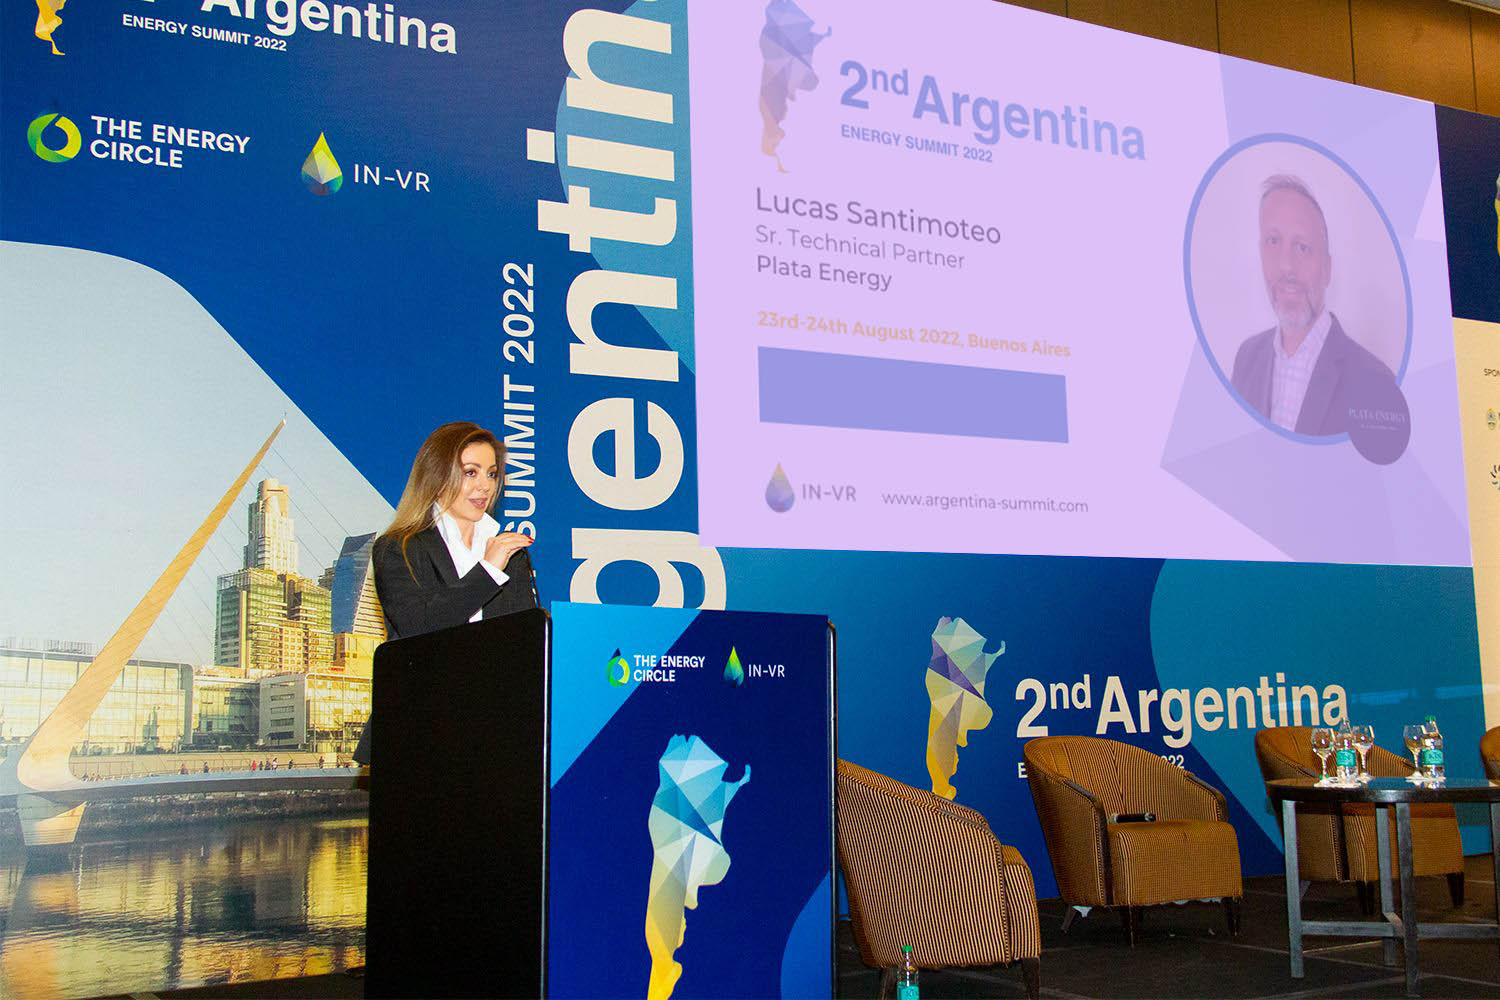 2nd Argentina Energy Summit 2022